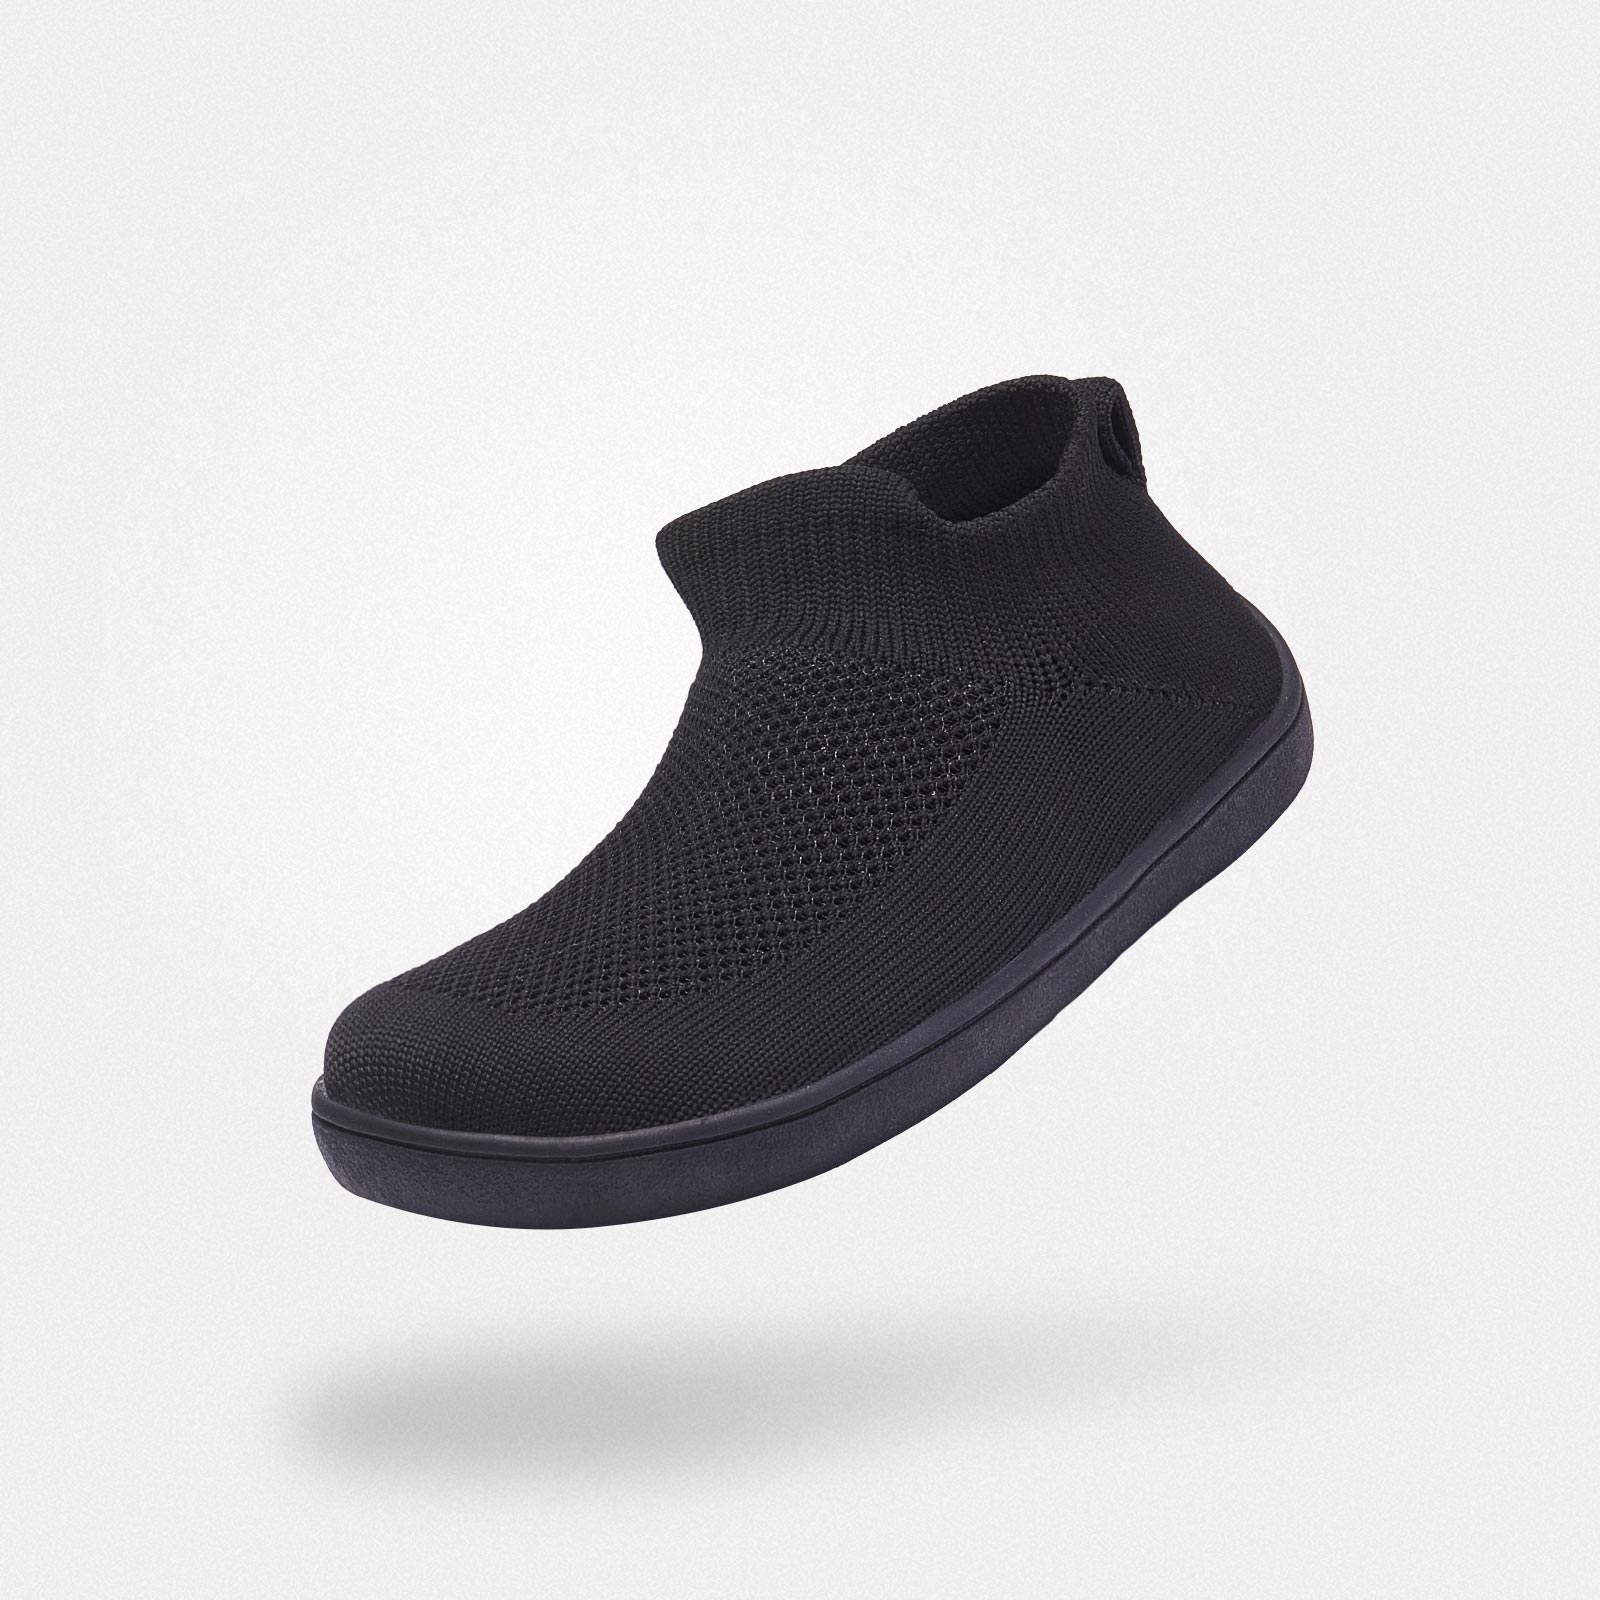 Smart Ⅰ - Barefoot Shoes - Keep Unrestrained - SAGUARO® – Saguaro Barefoot  Shoes